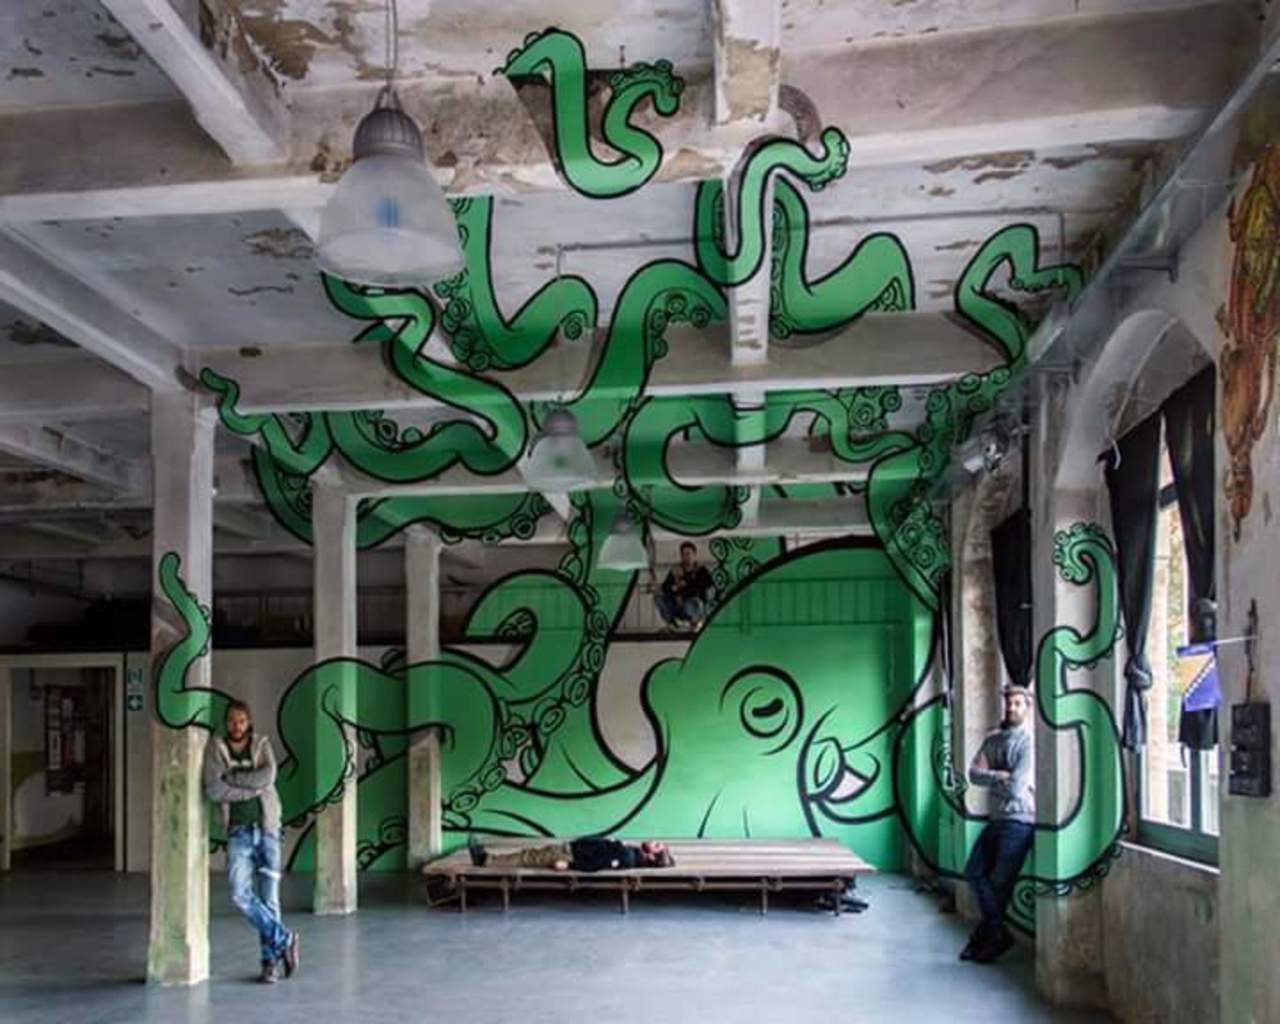 RT @Abbiad86: SALVAJE:
#StreetArt #Graffiti 
Artist: Truly Design http://t.co/xOEkcSUMph